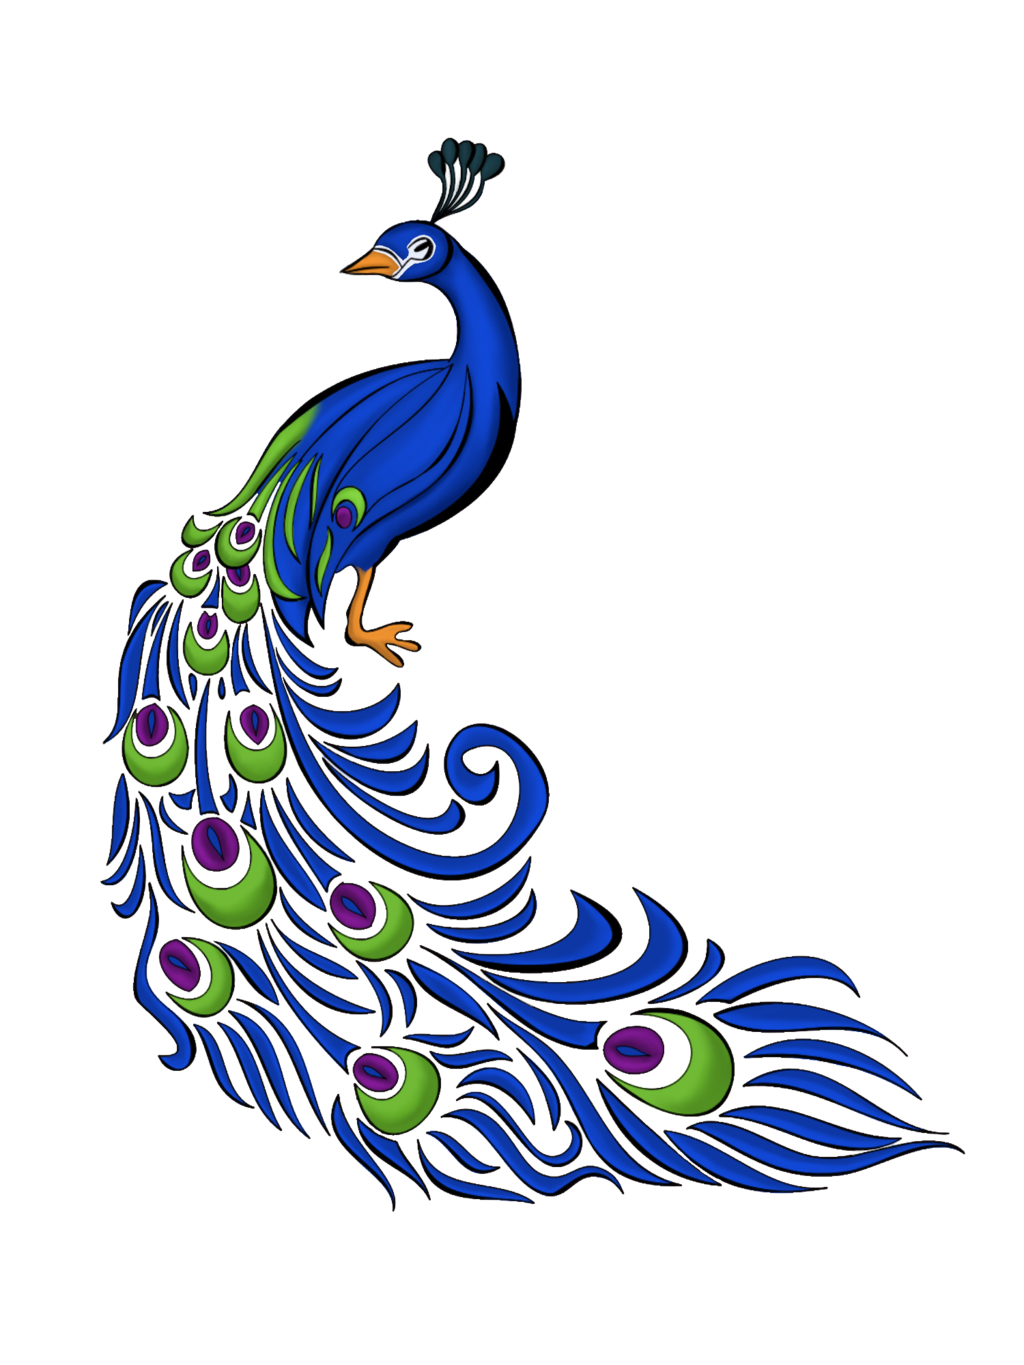 peacock: Retro-styled illustr